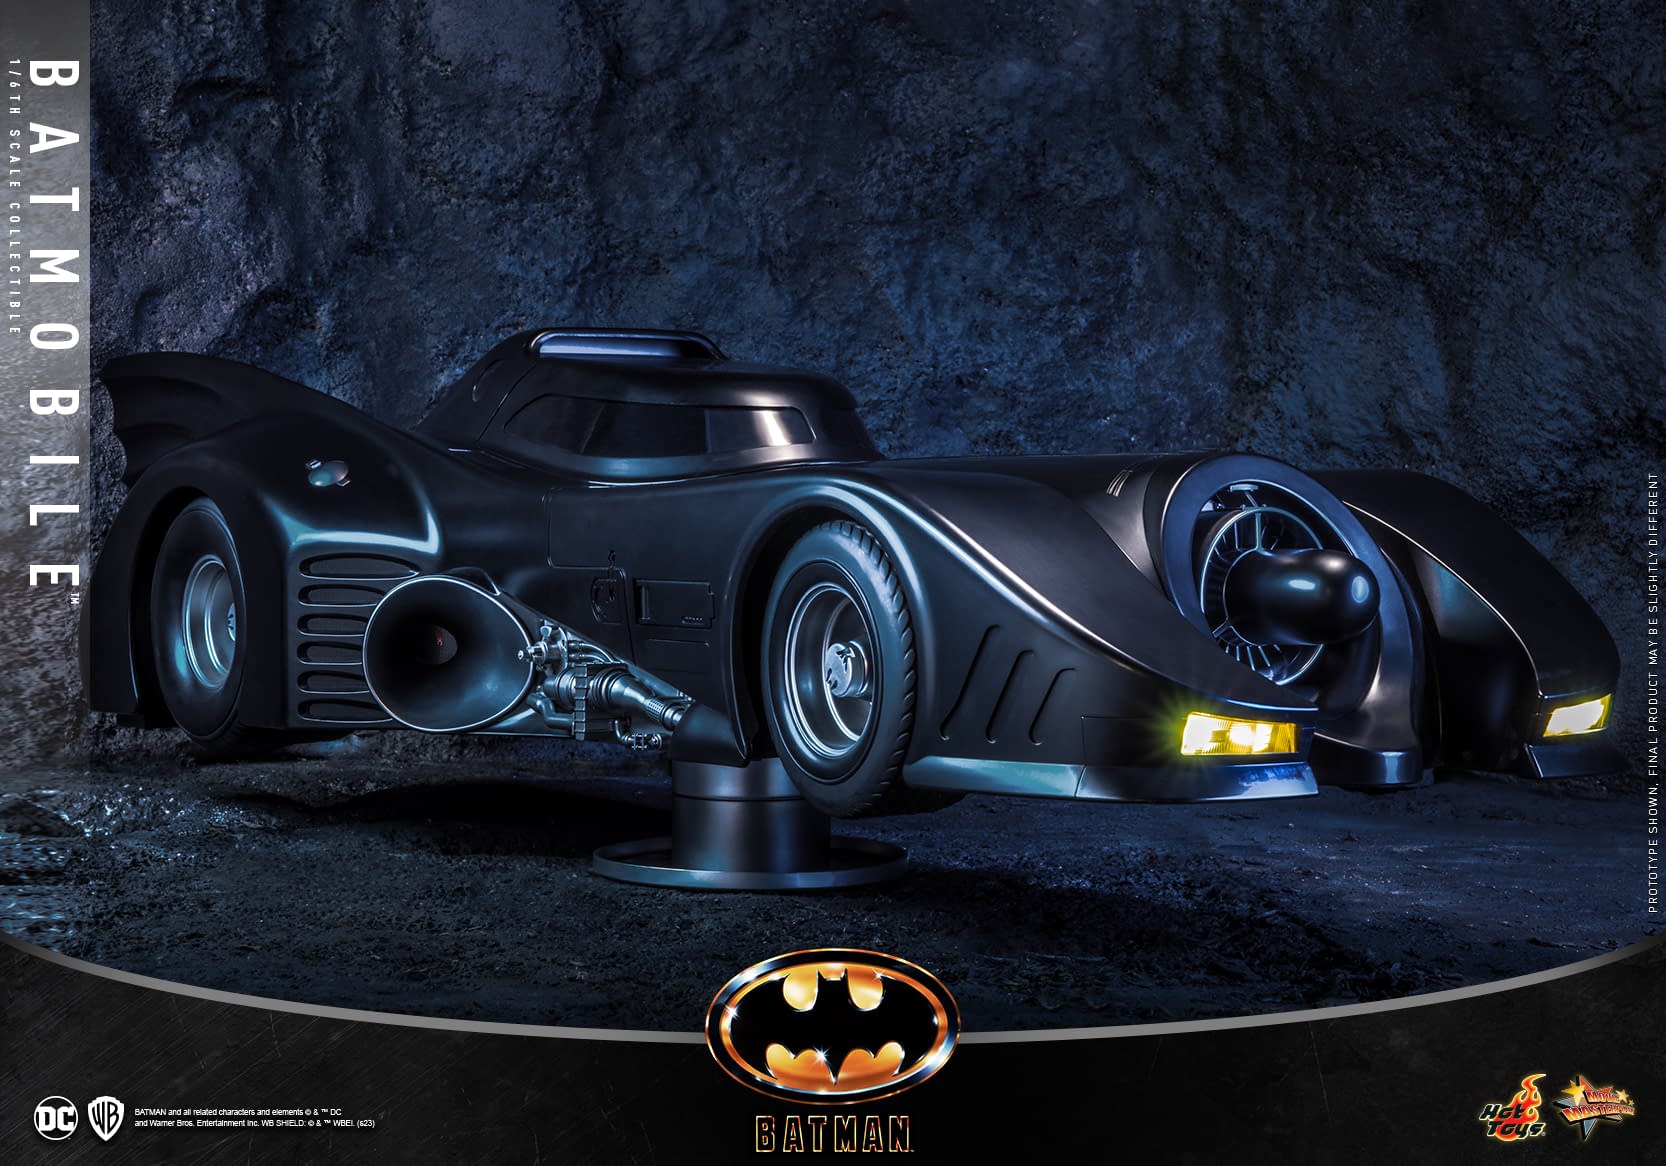 Hot Toys Reveals Massive 1/6 Scale Batman 1989 Batmobile